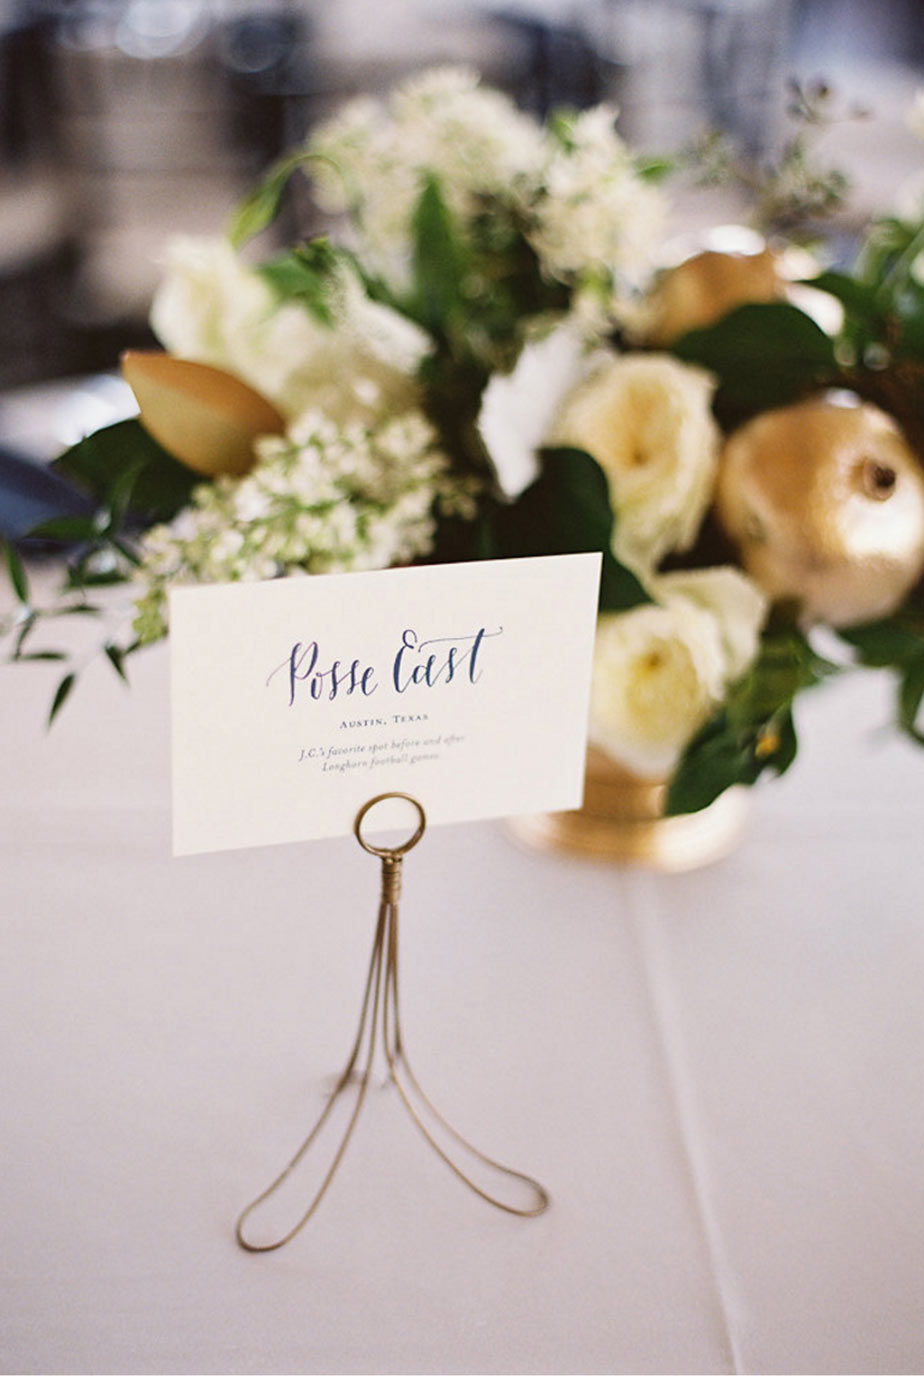 Table card at wedding reception